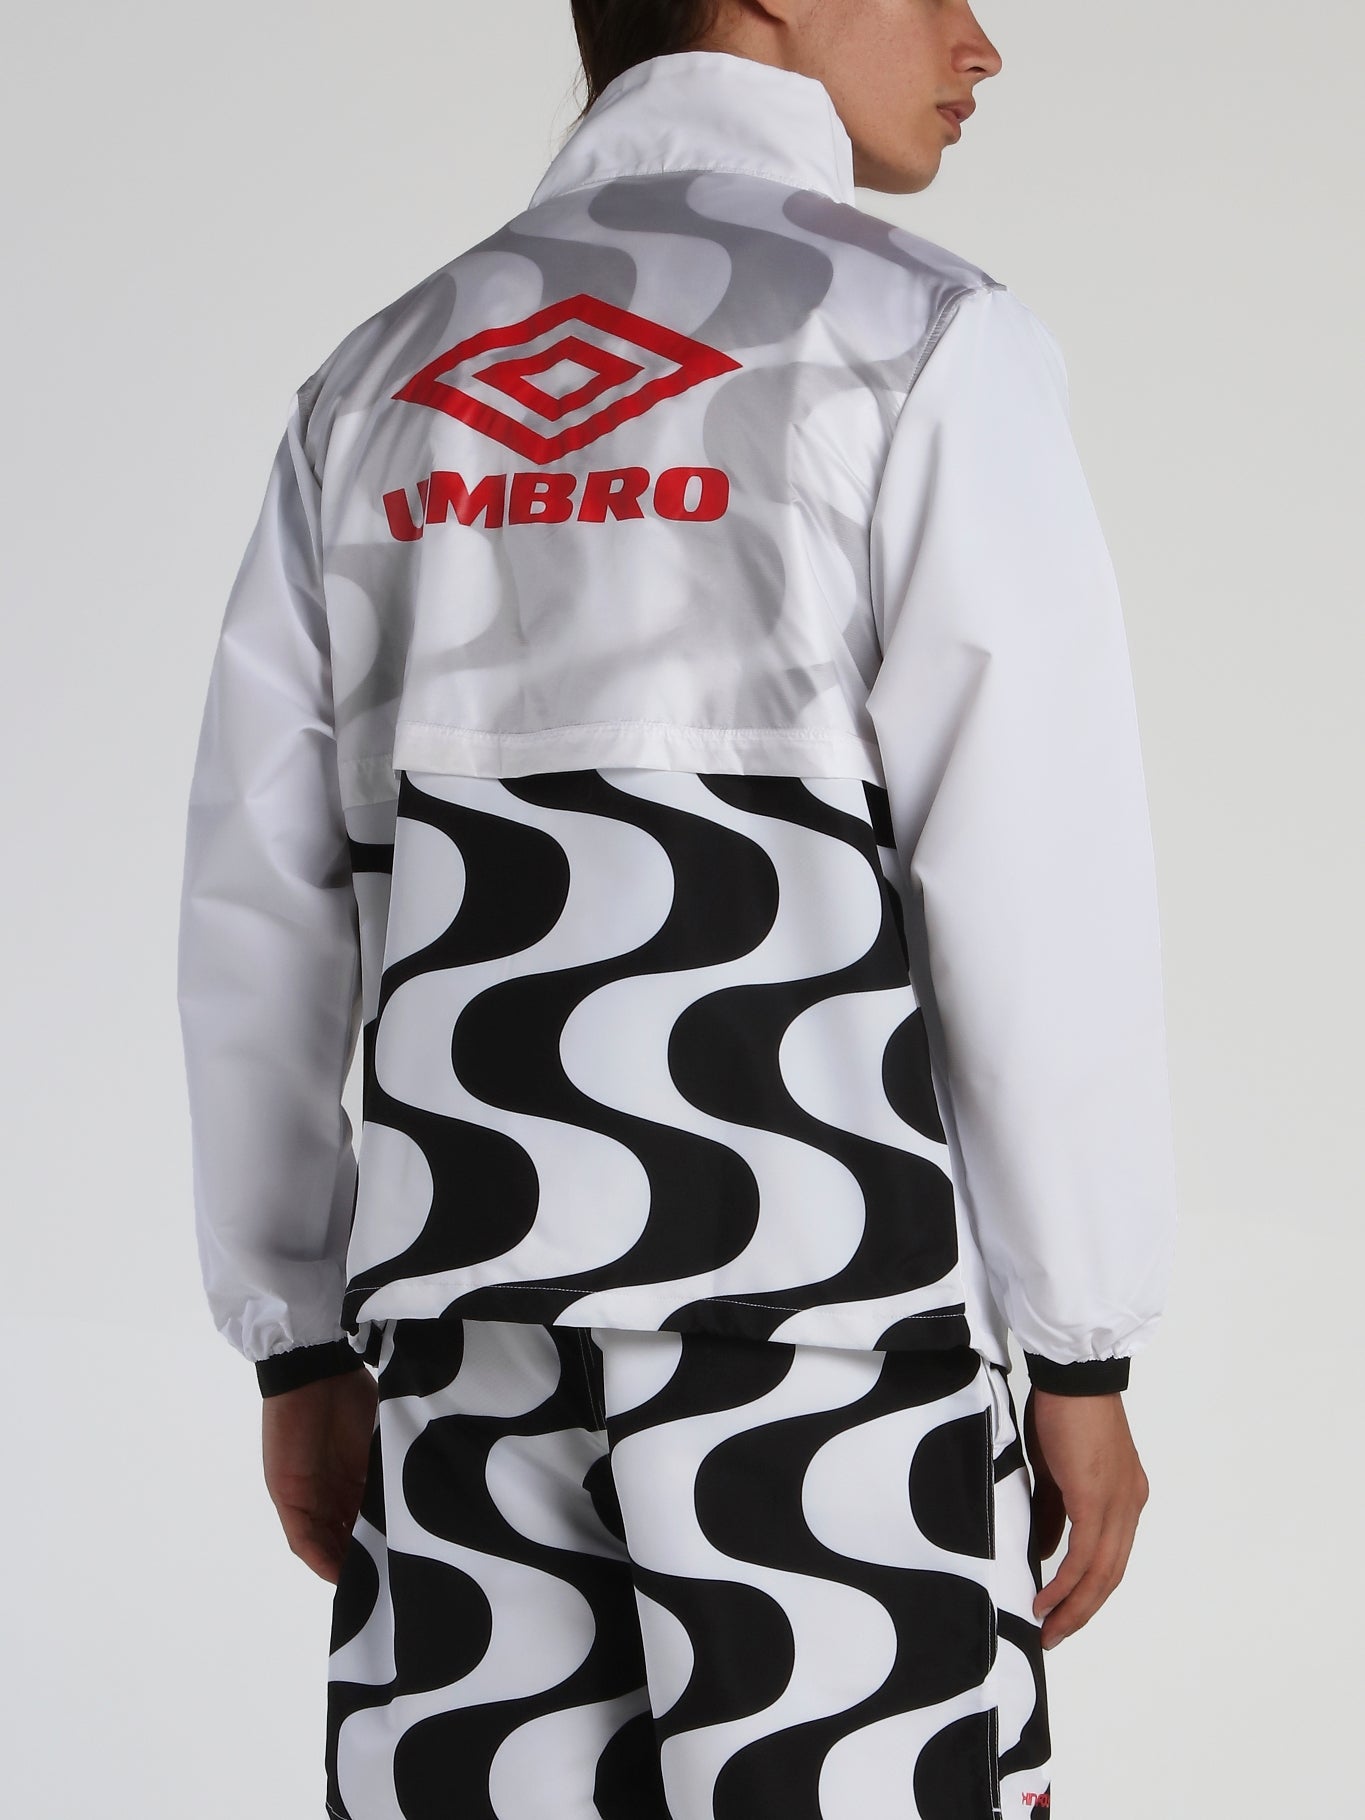 Kinfolk x Umbro White Track Jacket